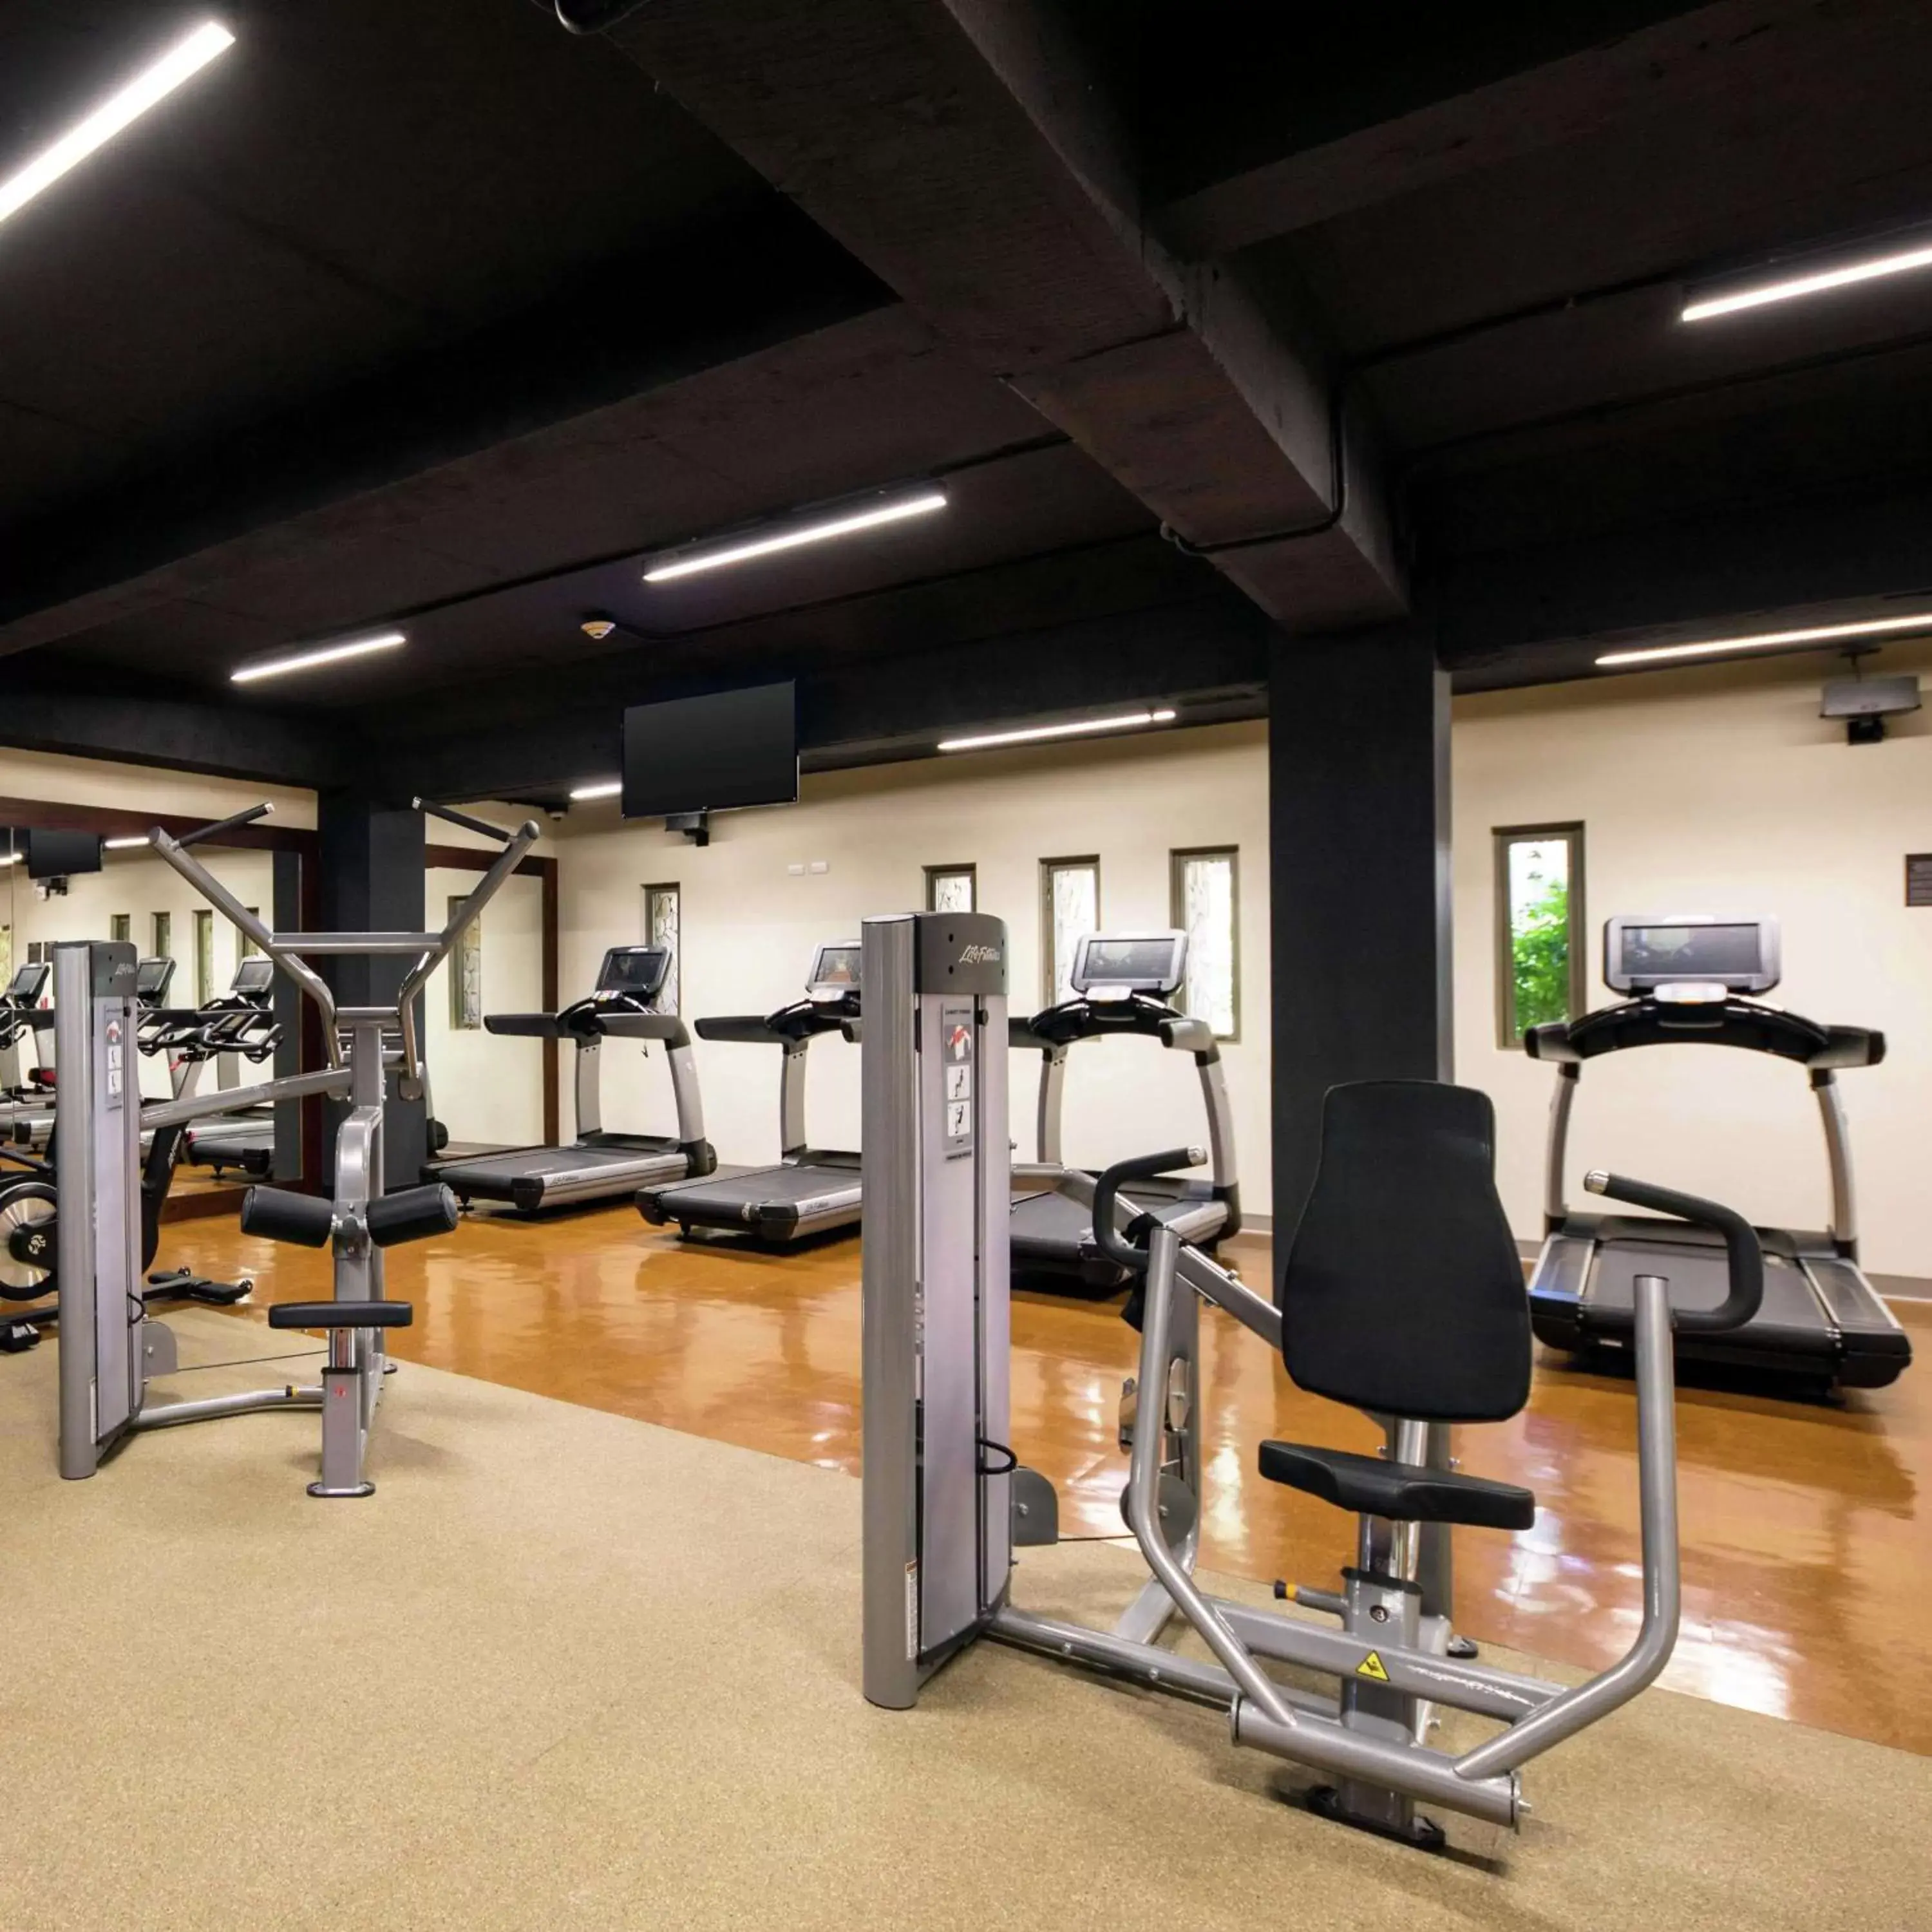 Fitness centre/facilities, Fitness Center/Facilities in Hilton Guatemala City, Guatemala